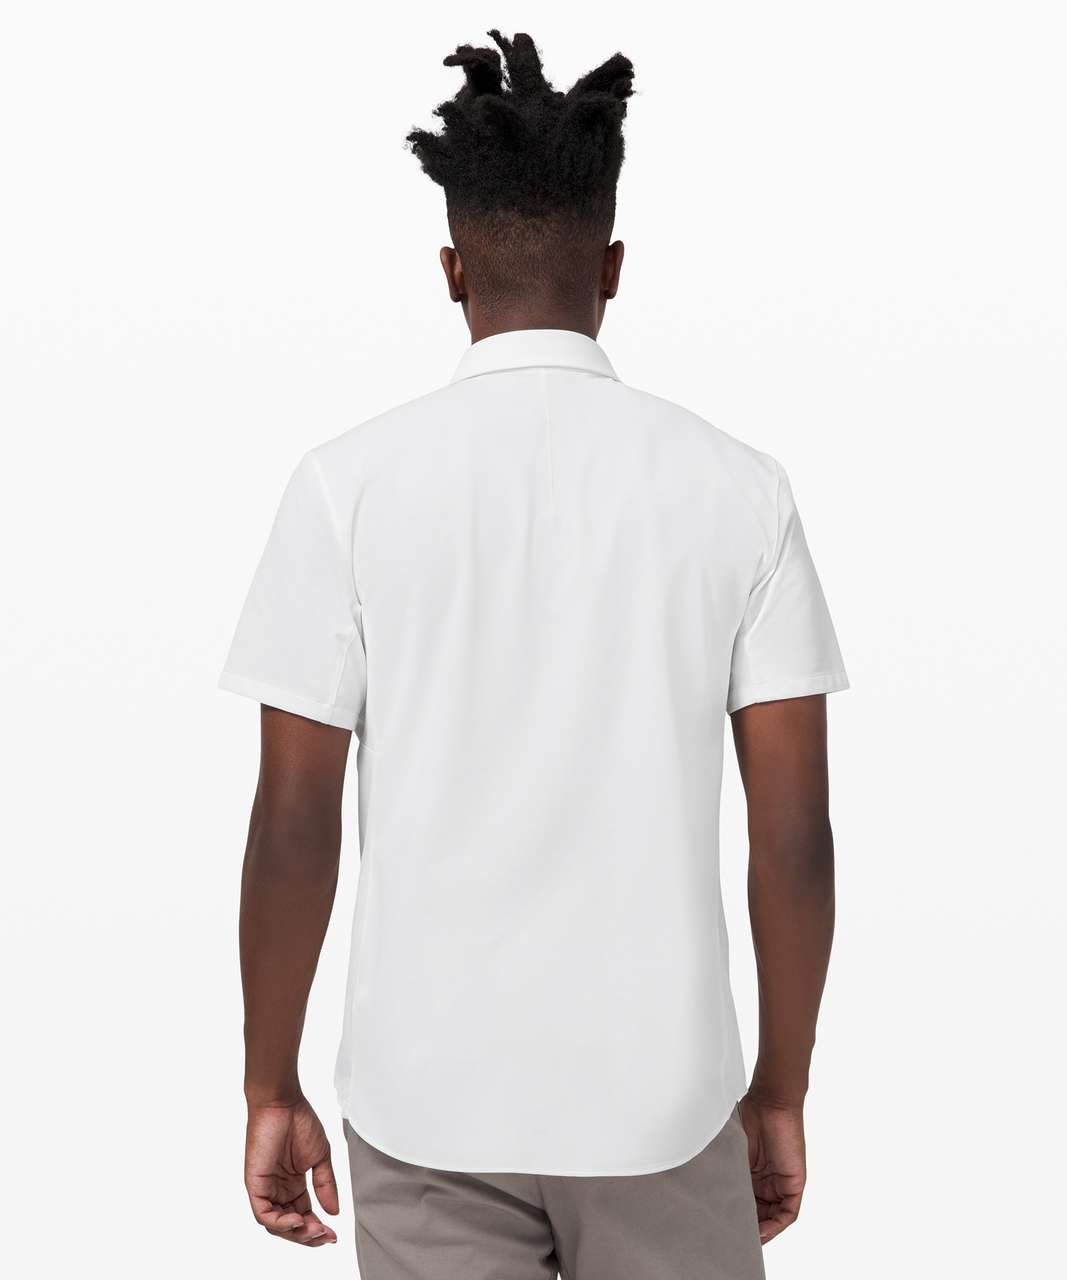 Lululemon Commission Short Sleeve Shirt - White (First Release)